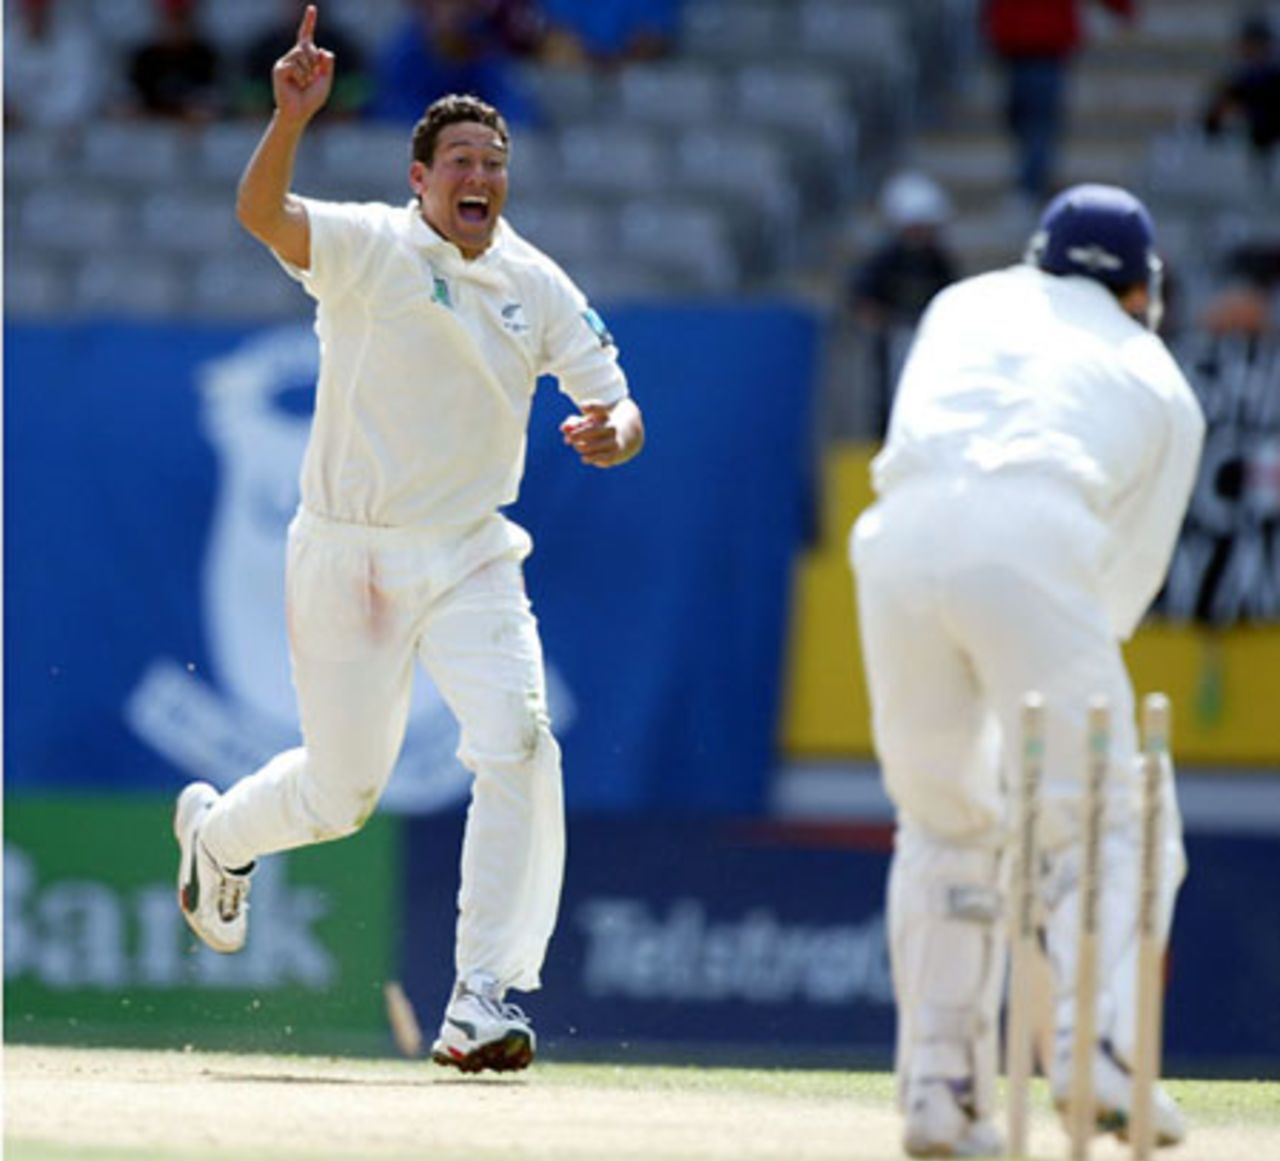 New Zealand bowler Daryl Tuffey celebrates the dismissal of England batsman Mark Ramprakash, bowled for two. 3rd Test: New Zealand v England at Eden Park, Auckland, 30 March-3 April 2002 (3 April 2002).